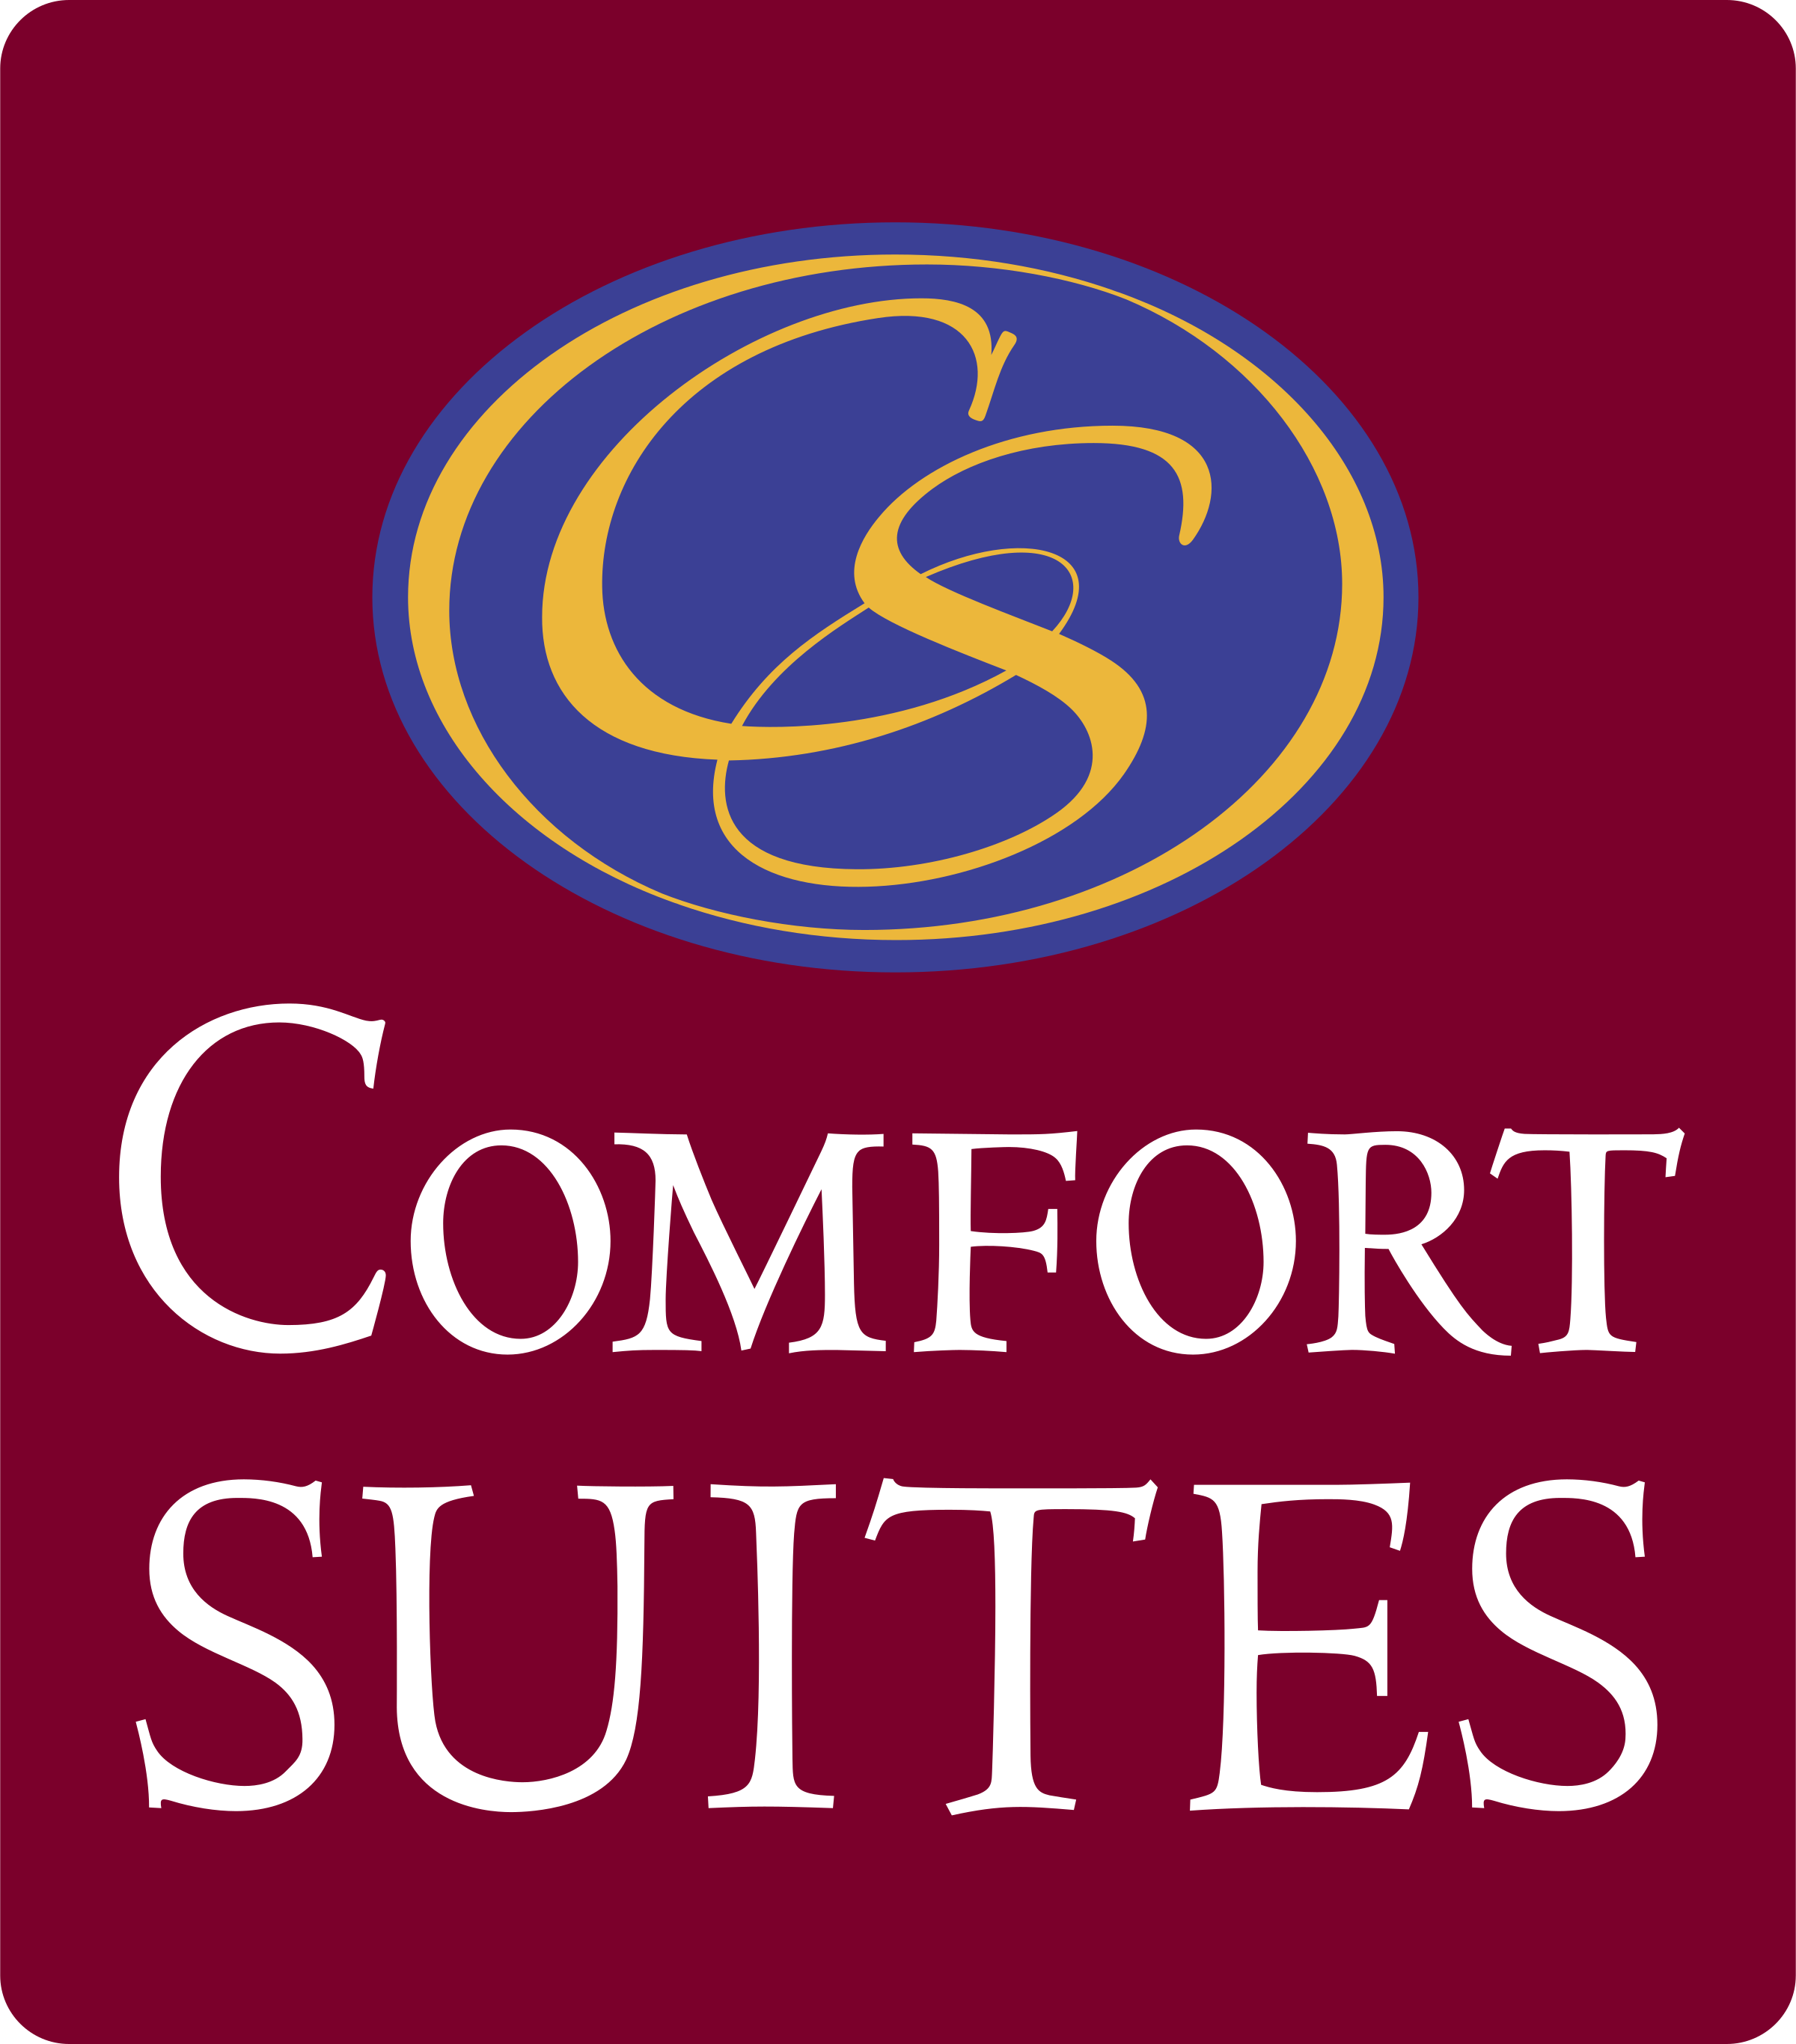 Comfort Suites new Logo PNG Transparent & SVG Vector.